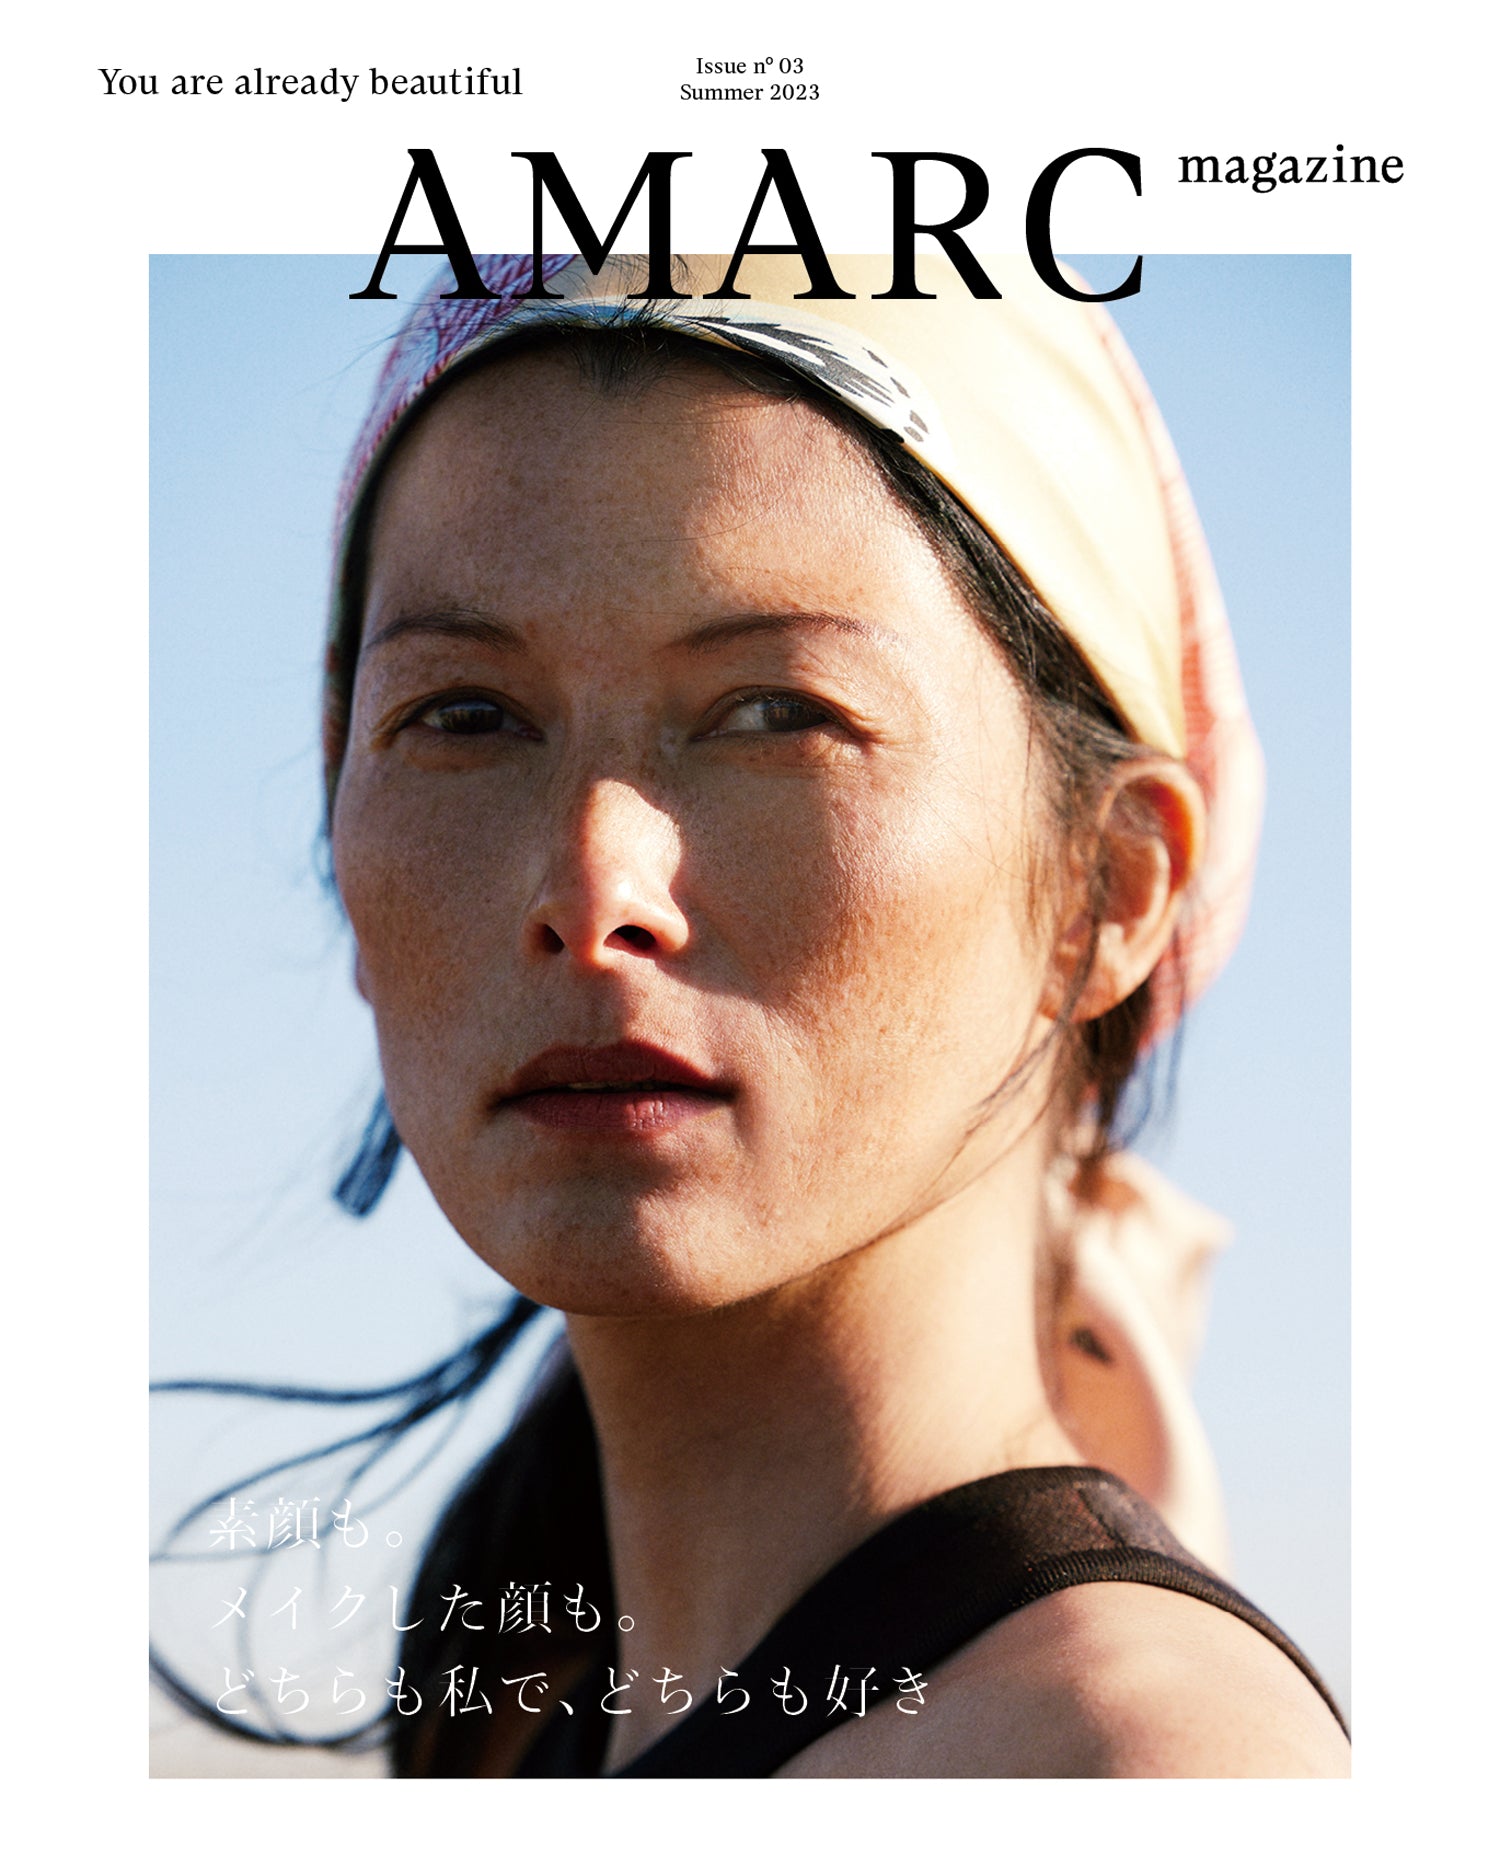 AMARC magazine issue.03